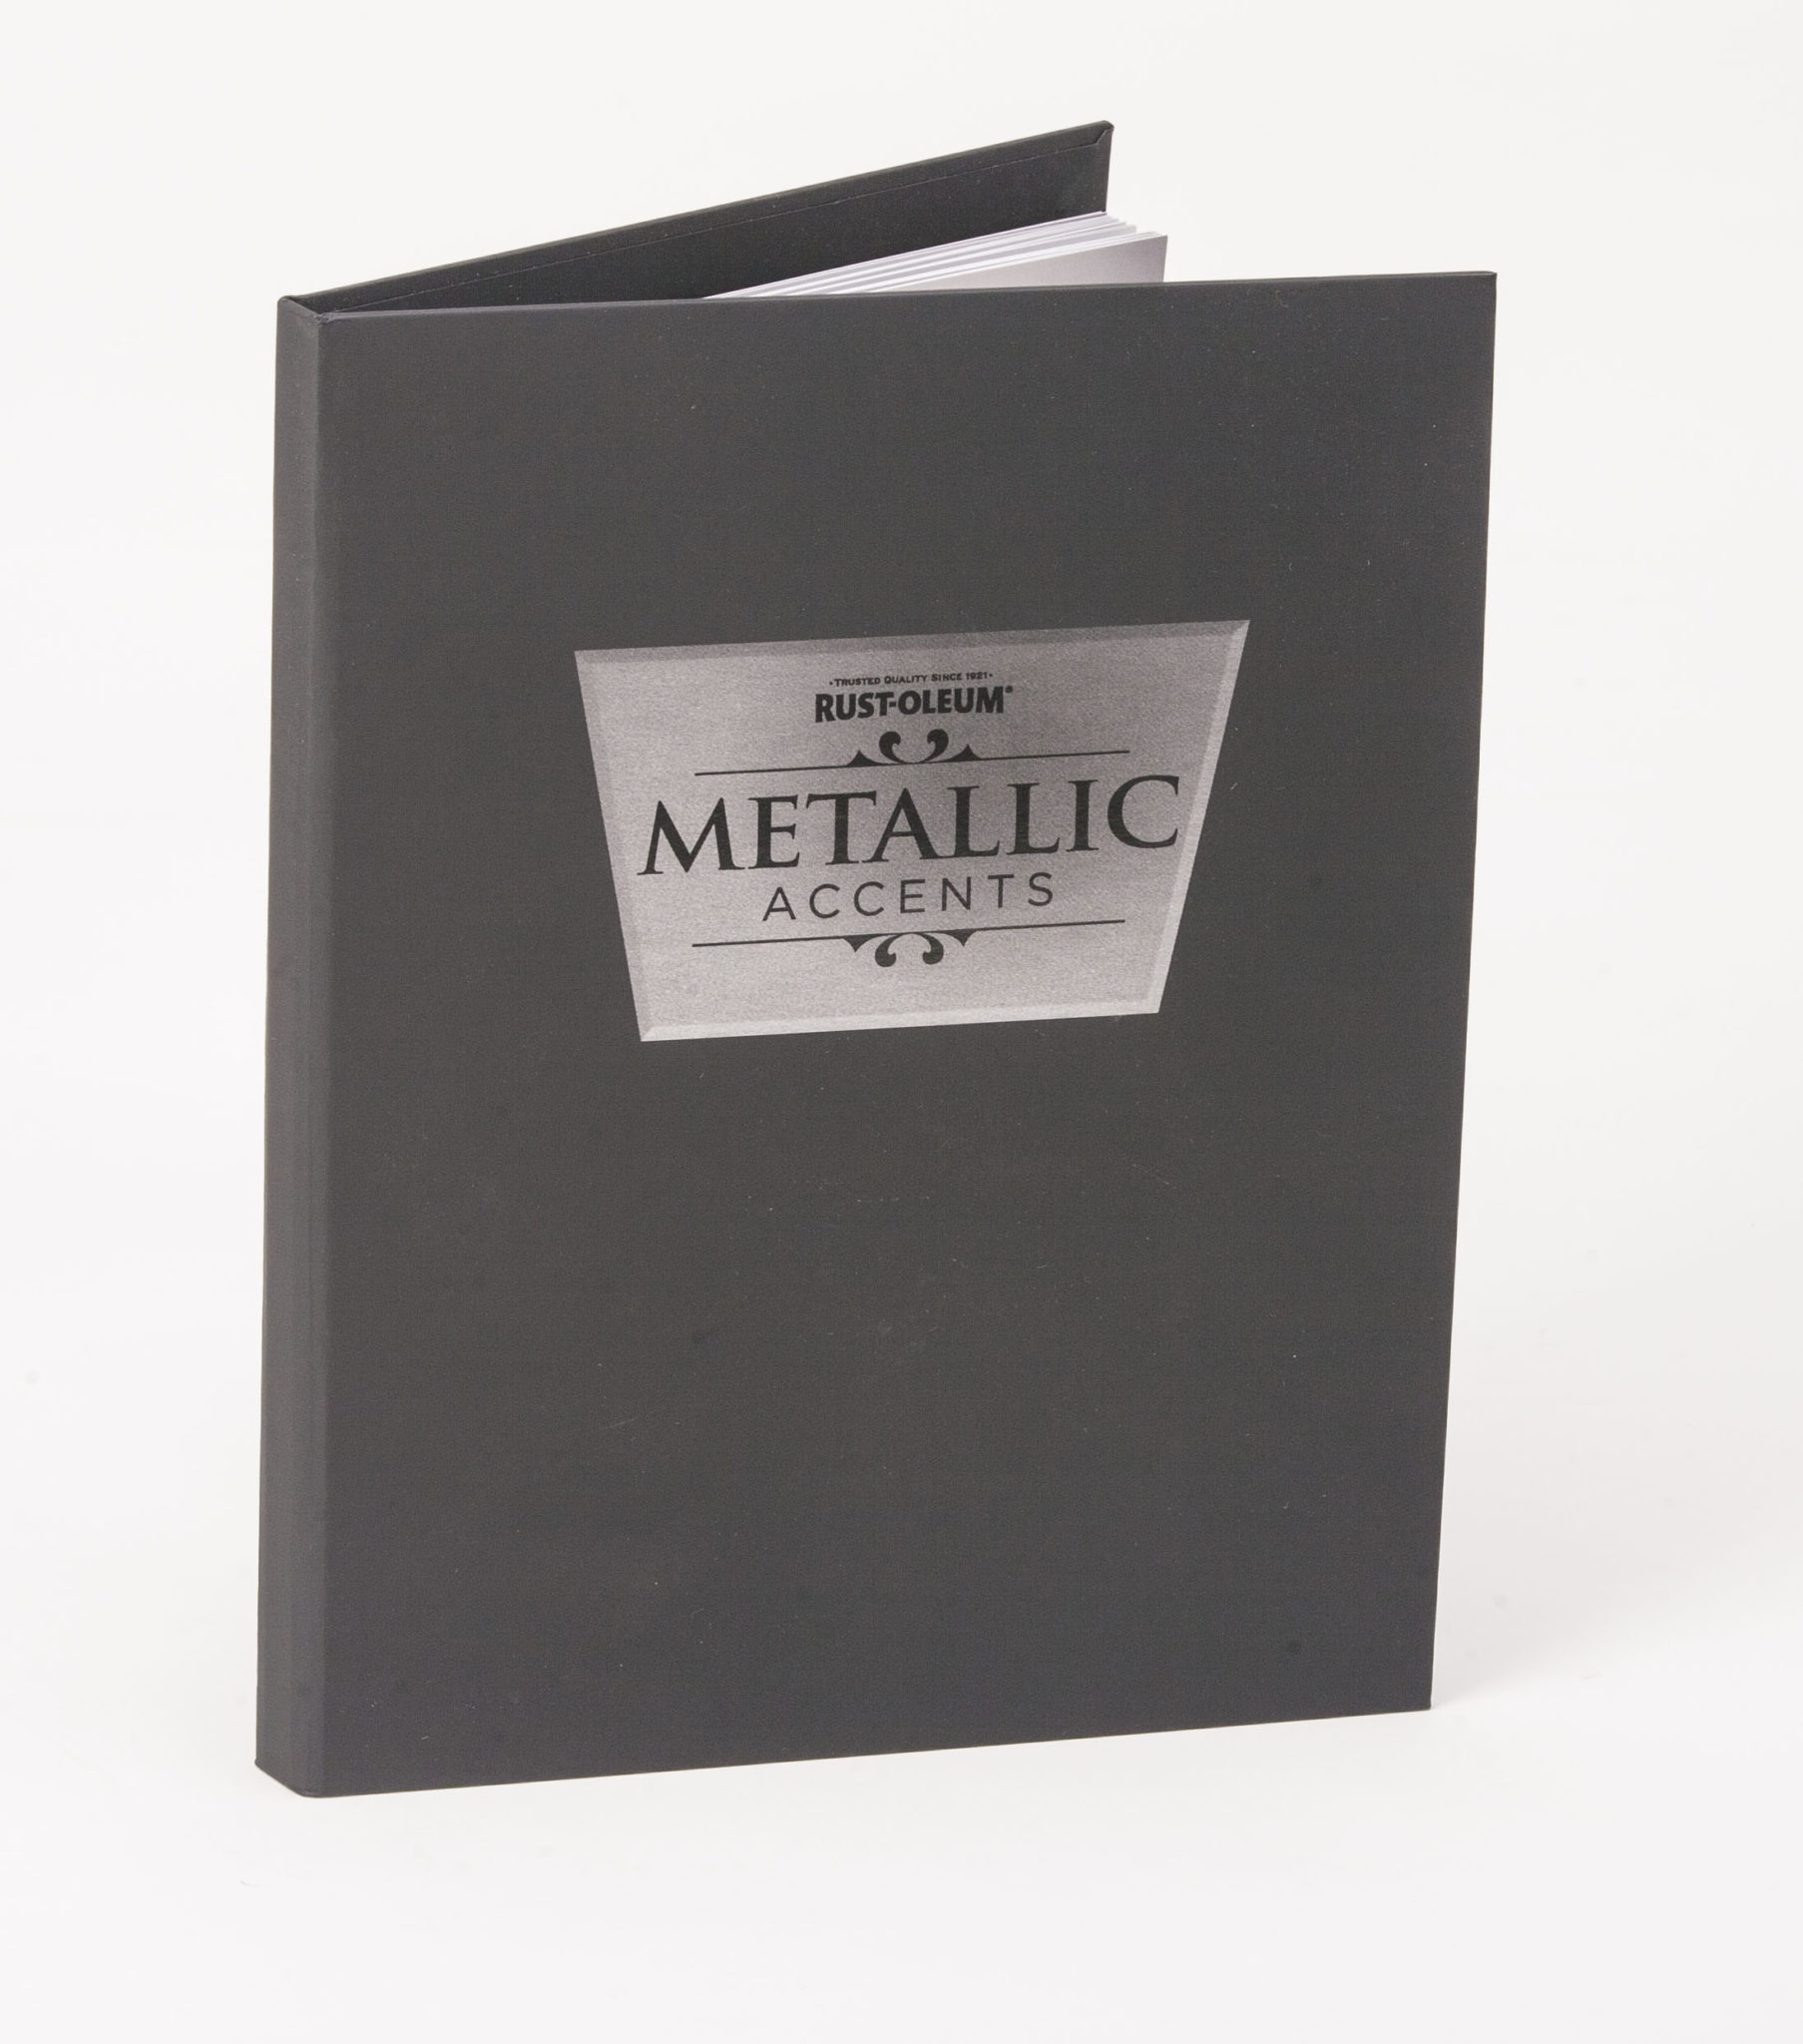 Case Wrapped Sample Color Case Metallic Accents Rust-Oleum